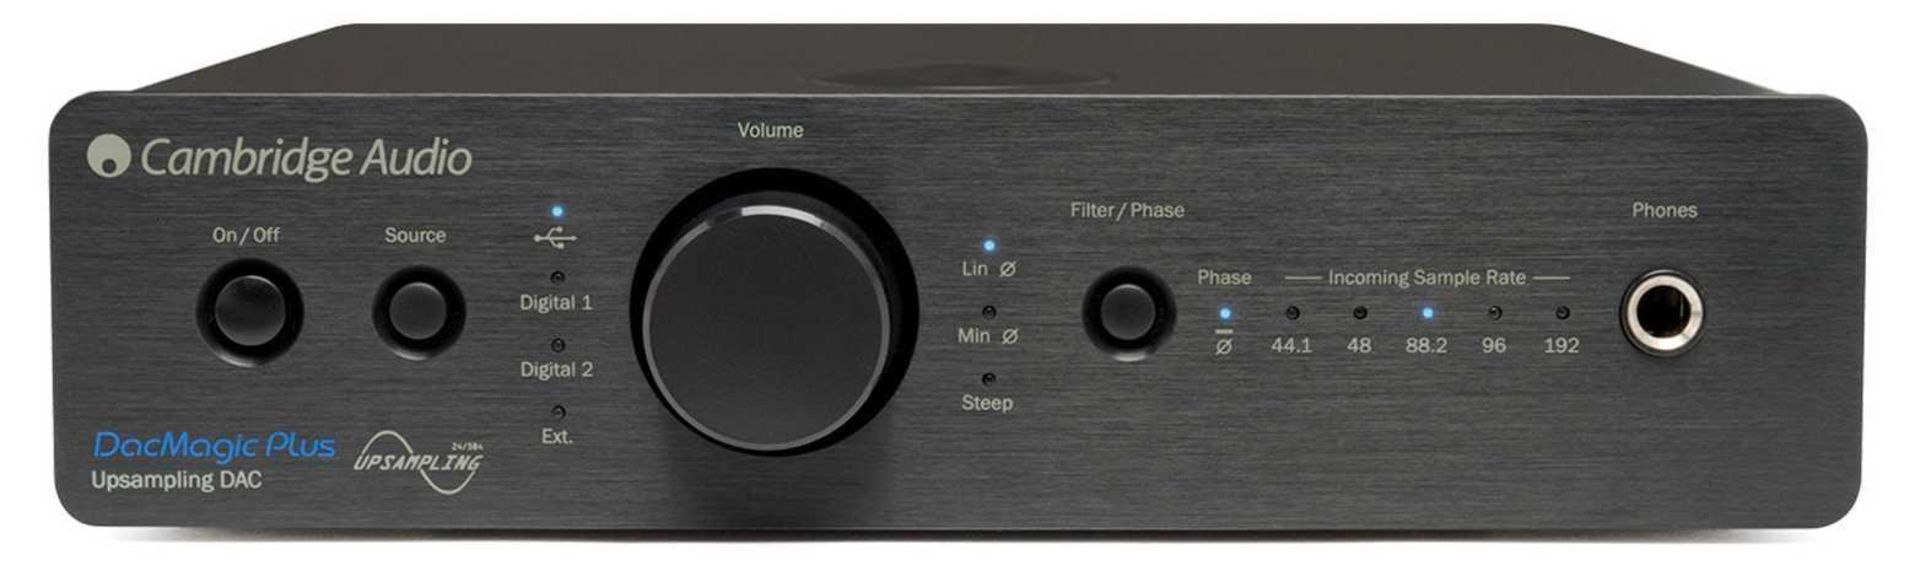 RRP £300 Boxed Cambridge Audio Dacmagic Plus (Black)Usb Dac/Headphone Amp Tested And Working